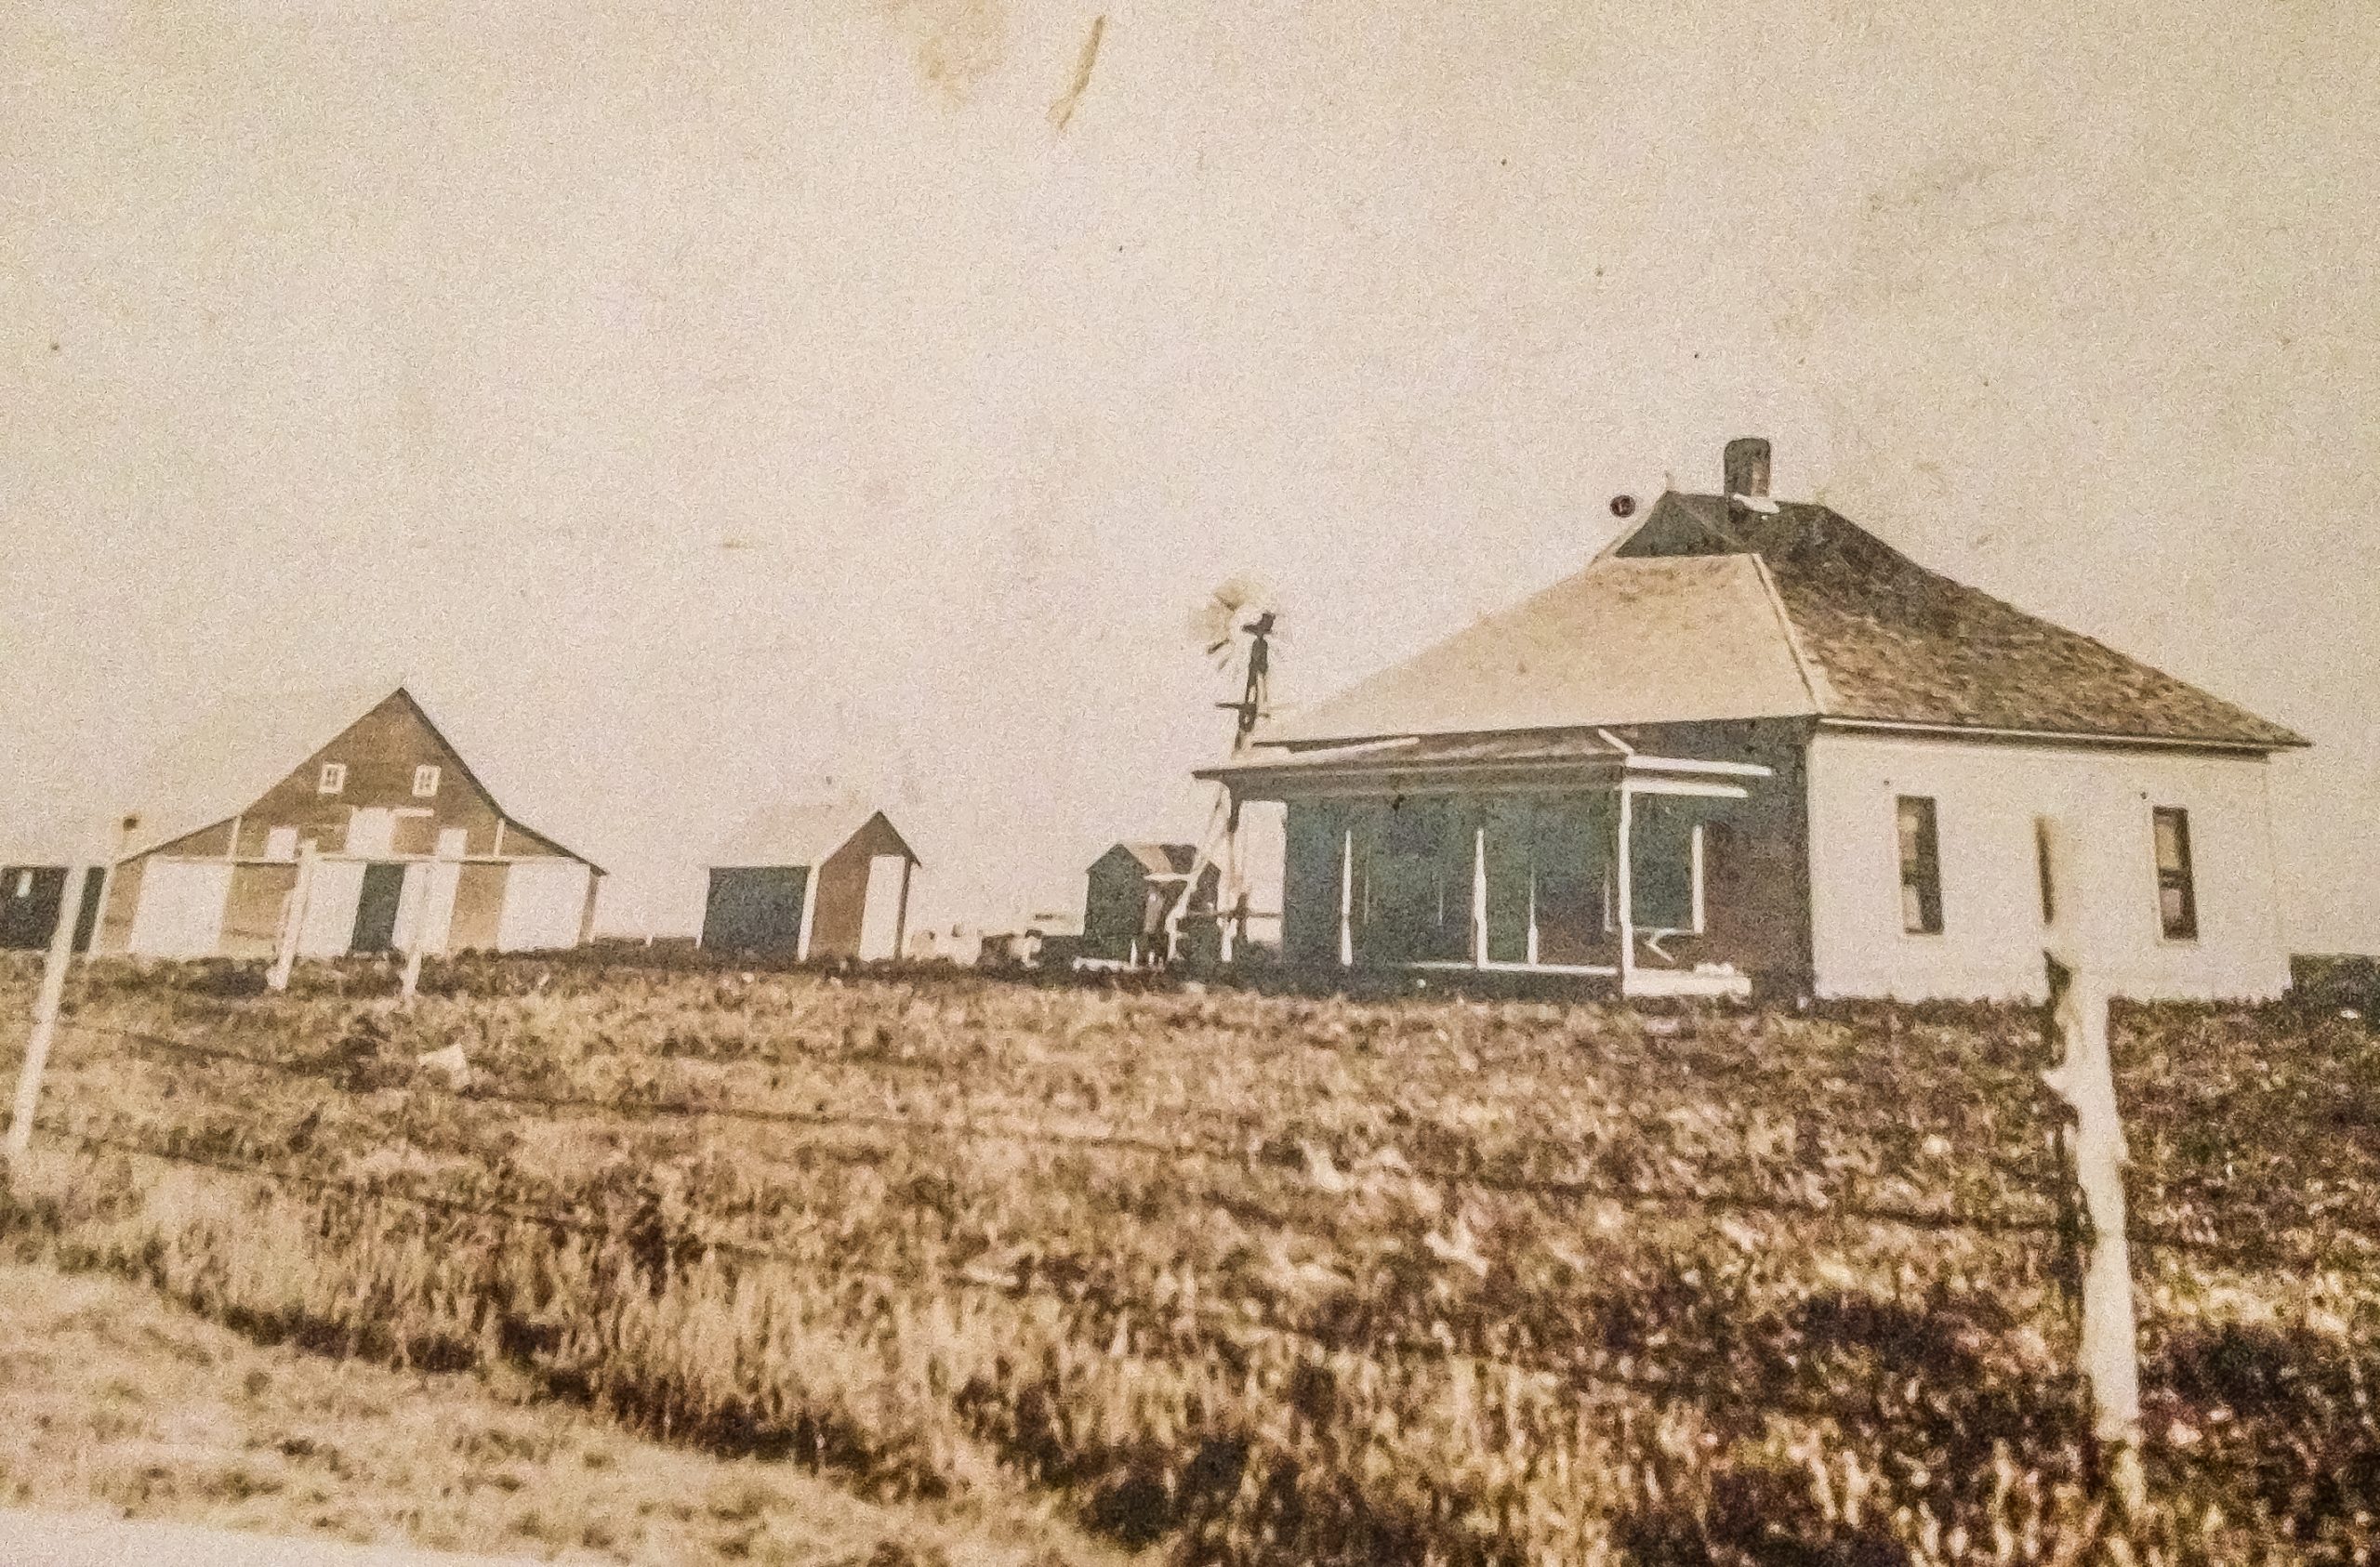 Scott farm in Clark County, Kansas around 1900.